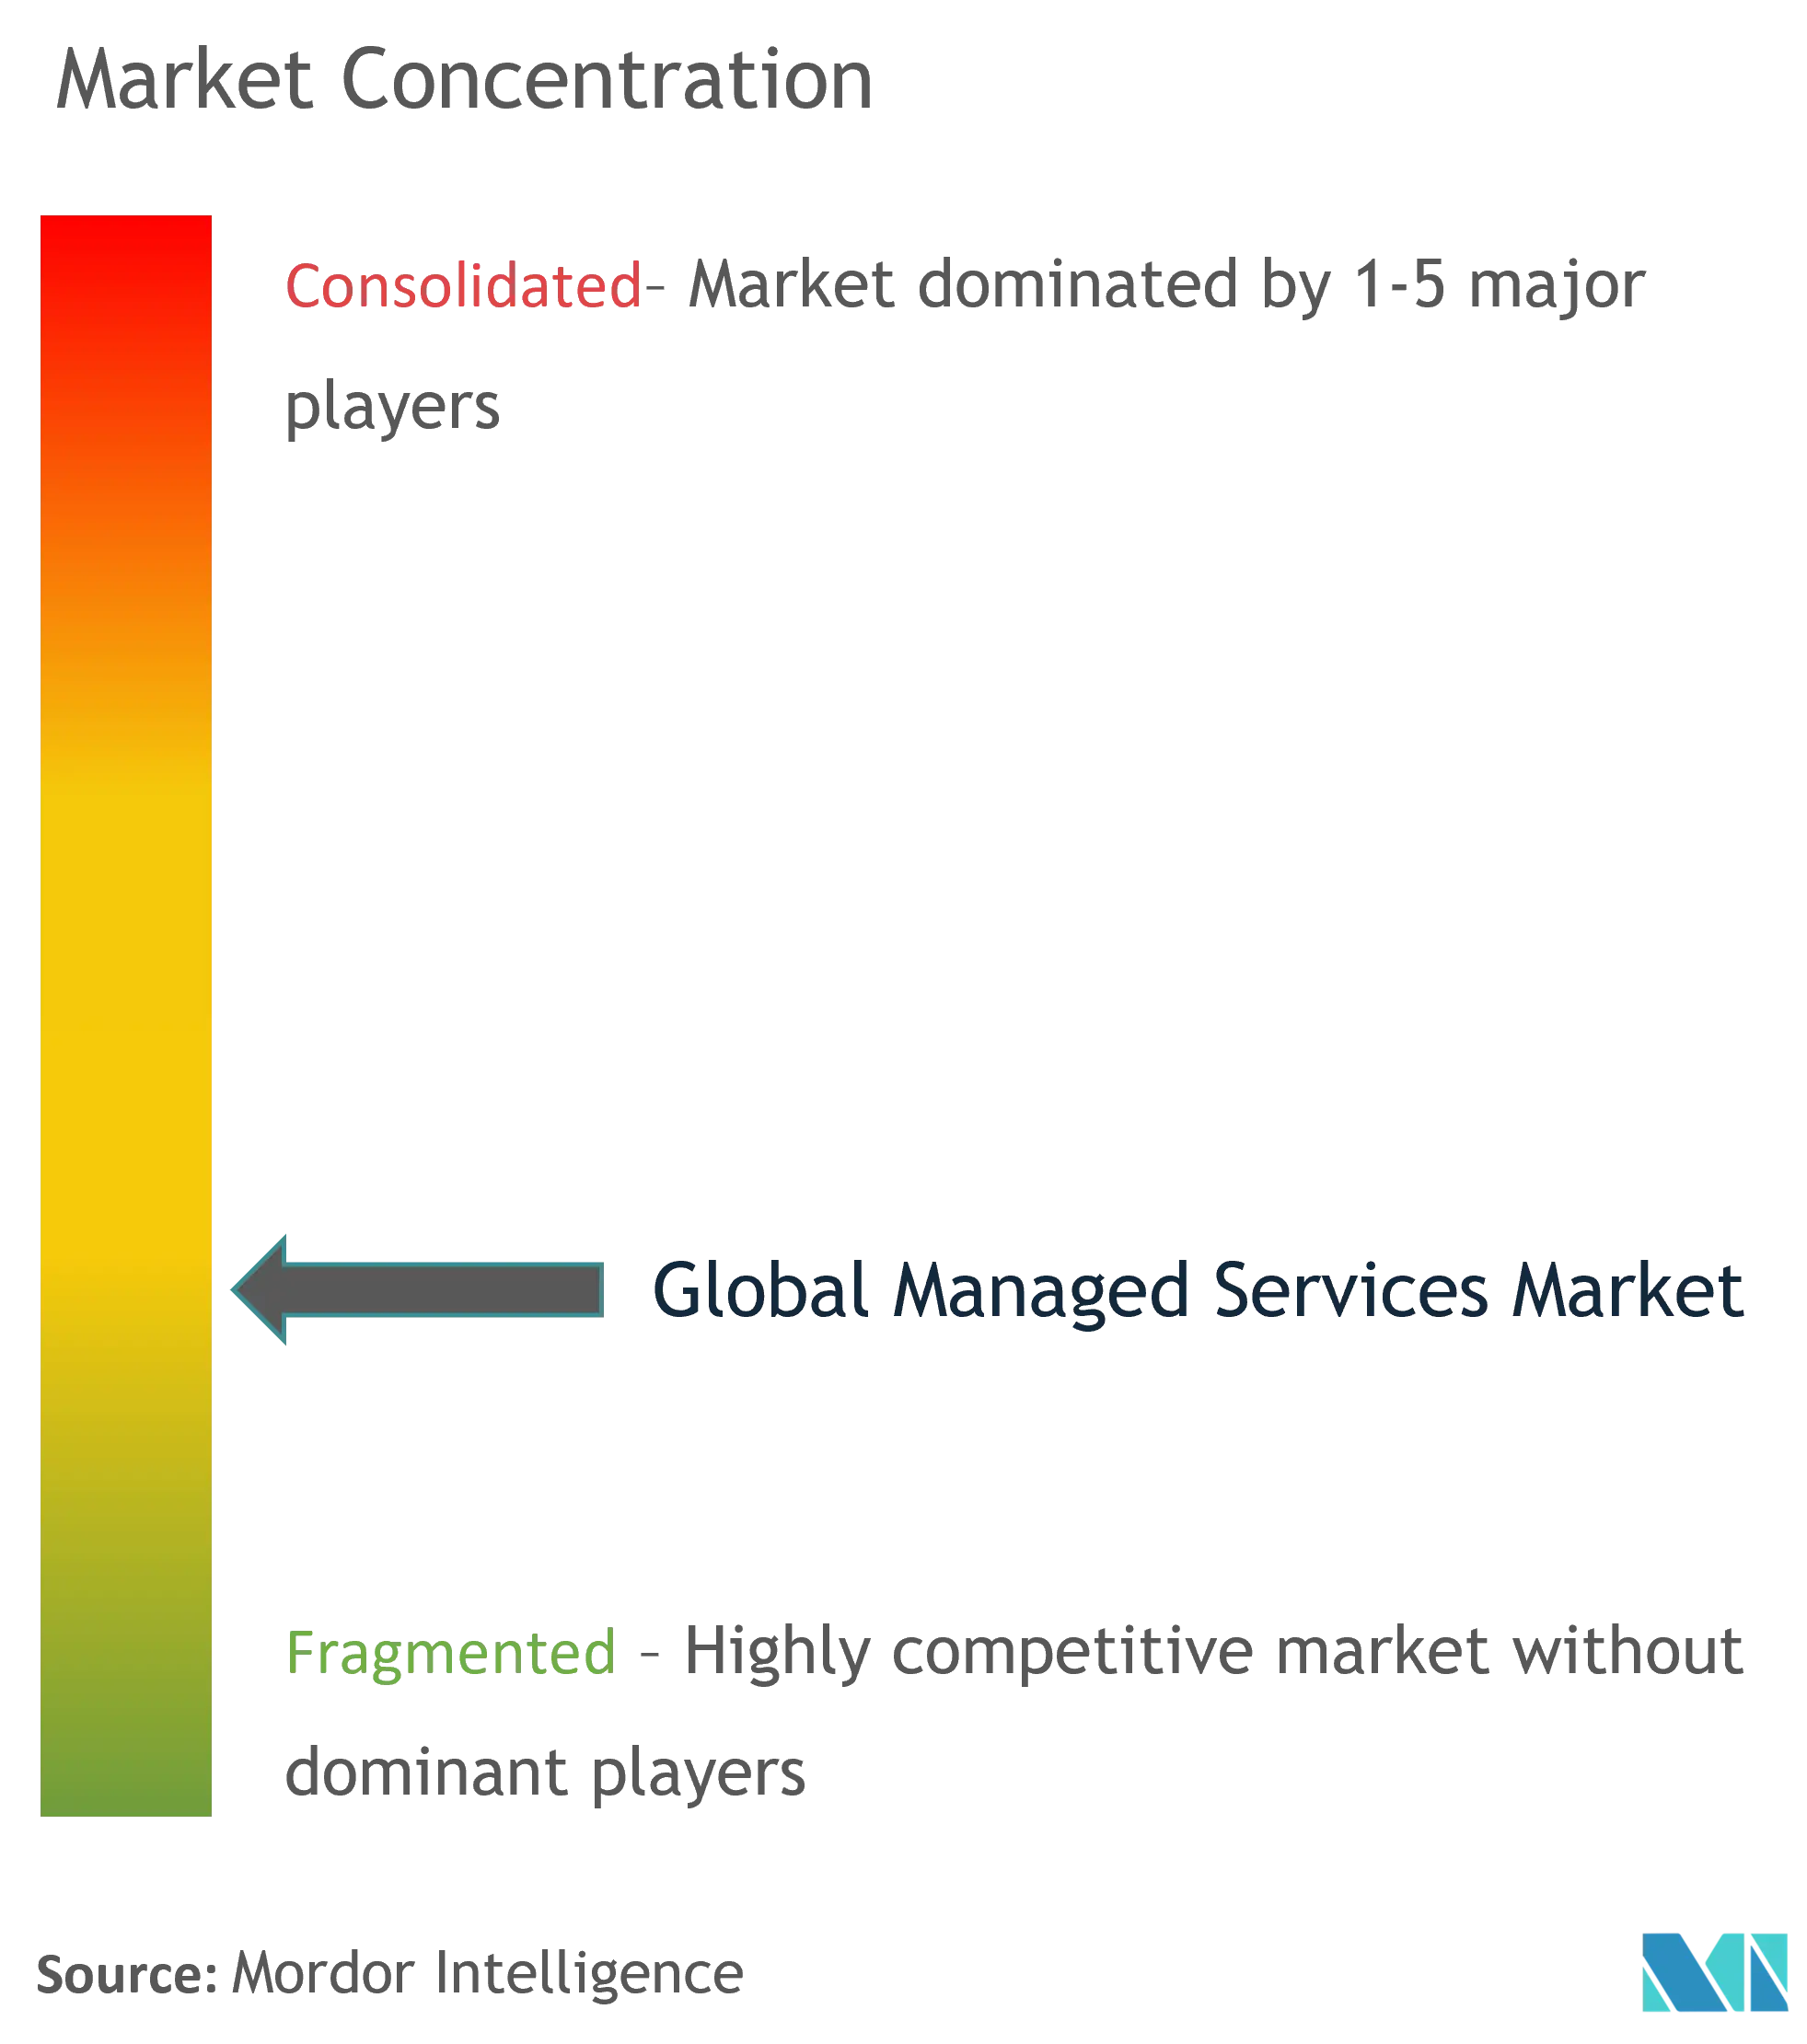 Managed Services Market Concentration